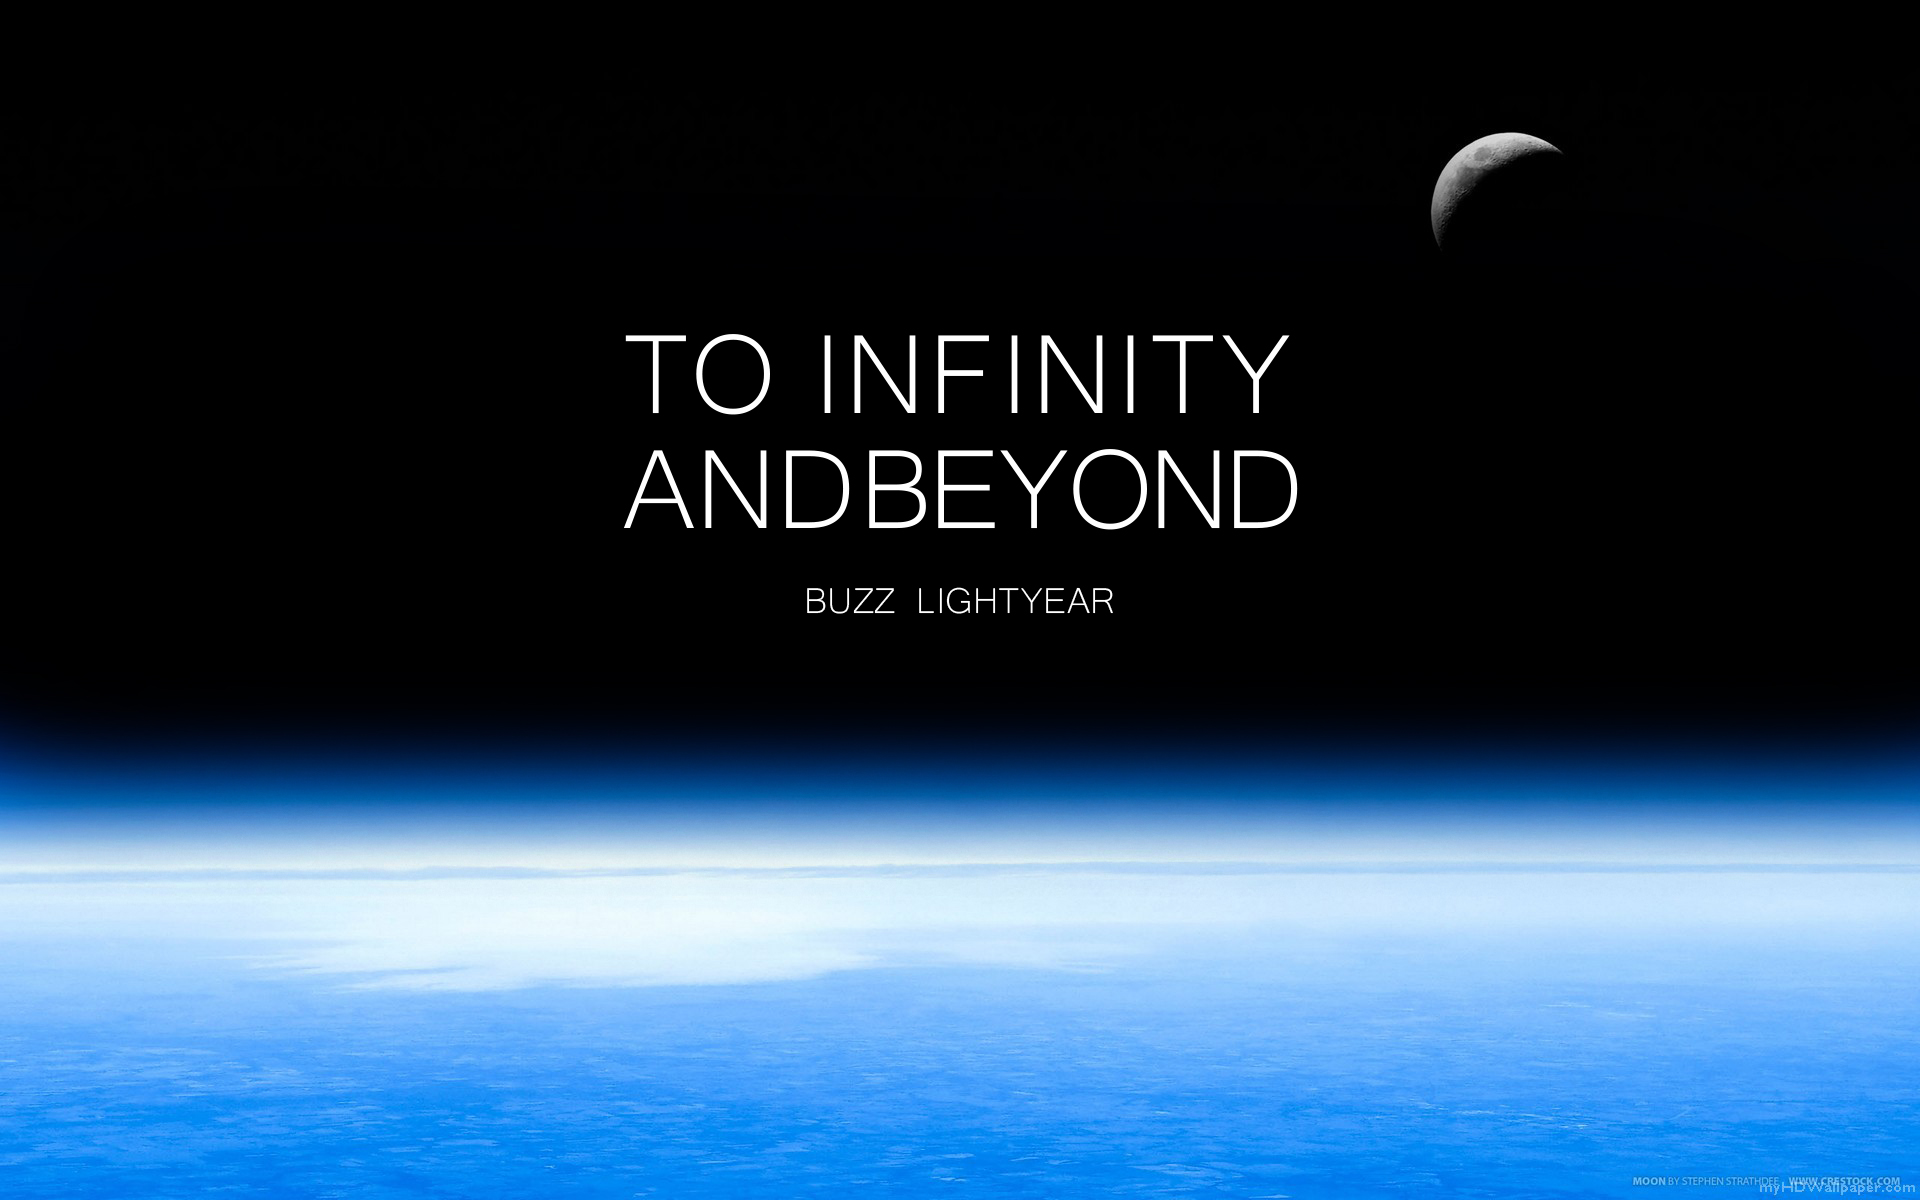 Buzz Lightyear To Infinity And Beyond by eposselt on DeviantArt